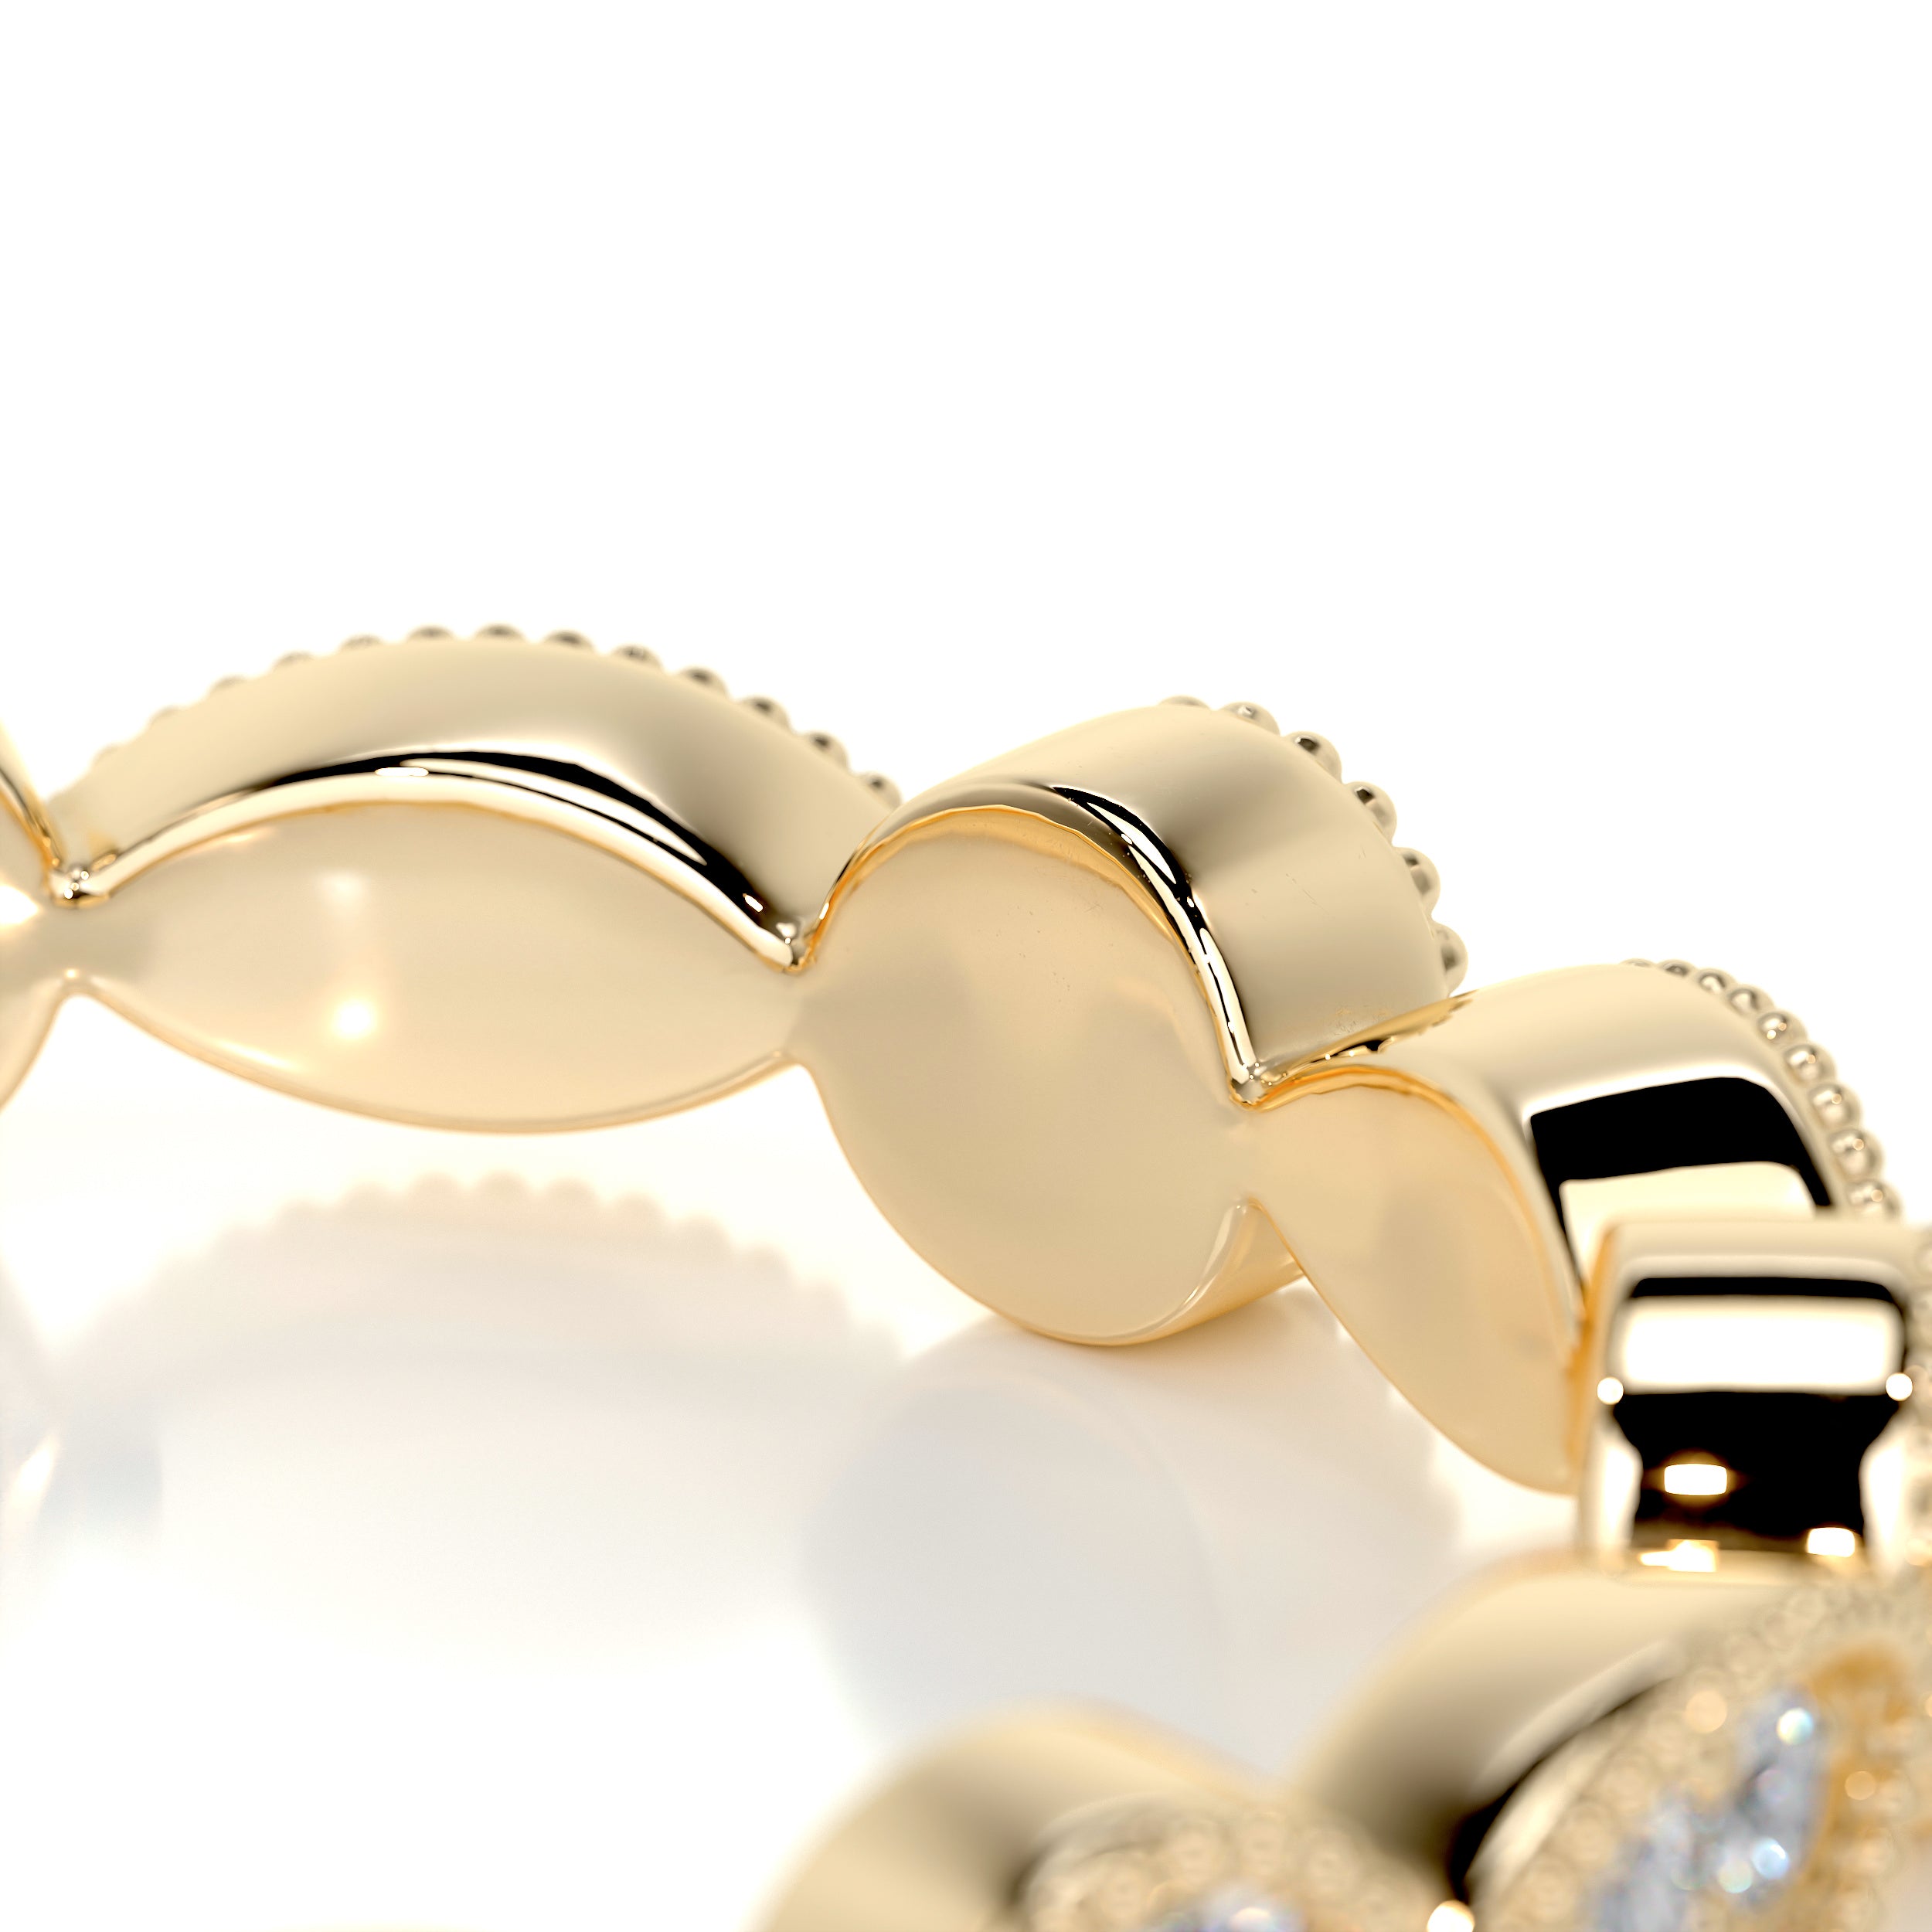 Amelia Eternity Wedding Ring   (0.5 Carat) -18K Yellow Gold